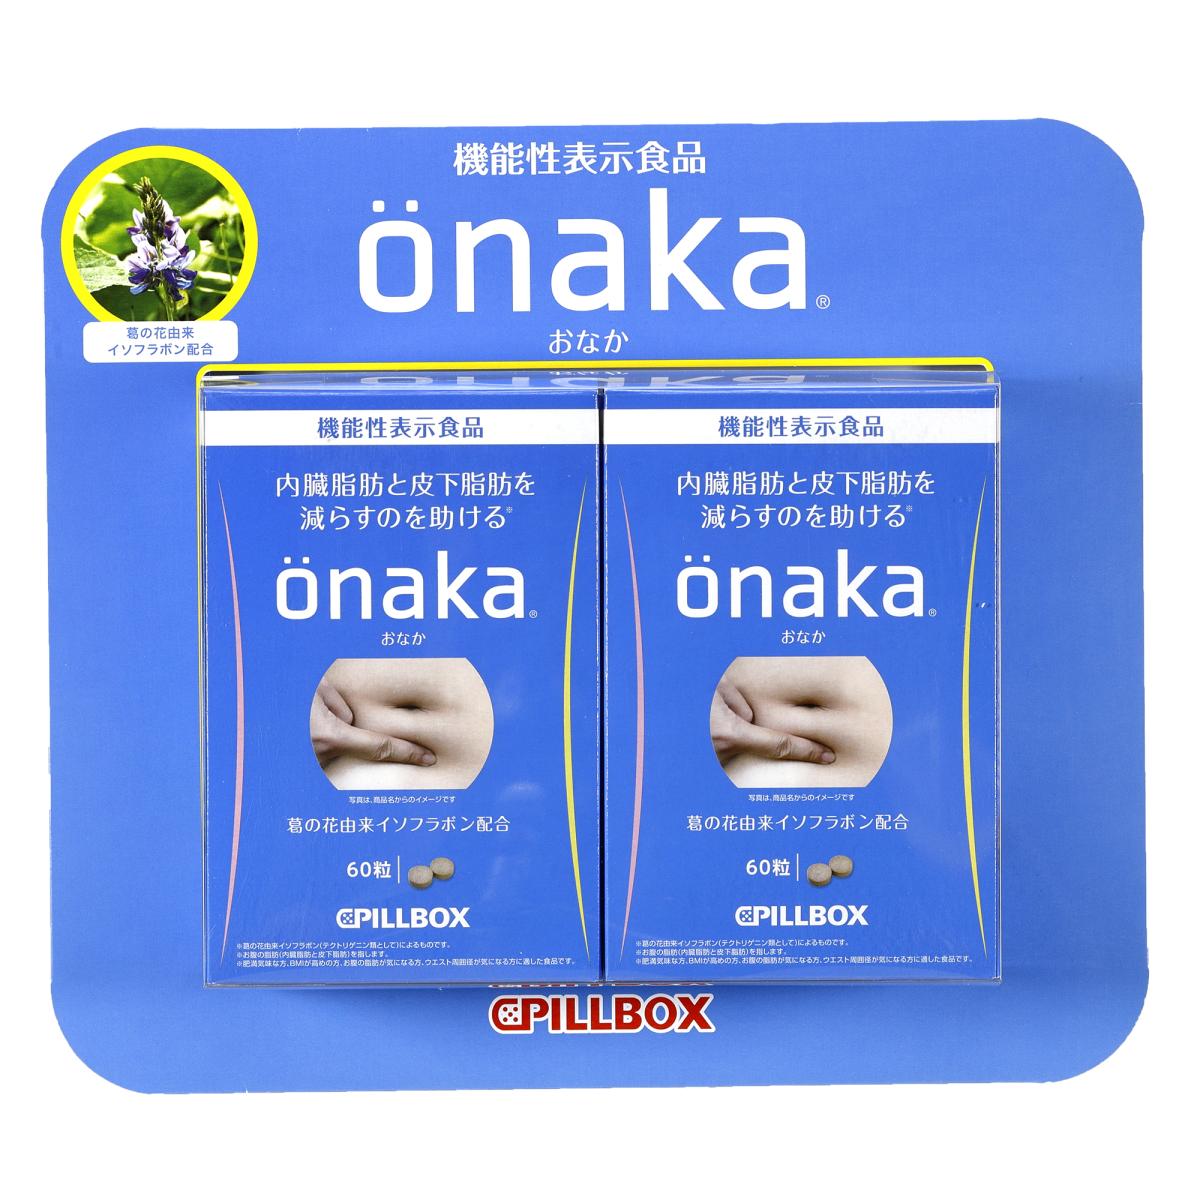 Onaka サプリメント 60粒 X 2 箱 セット | Costco Japan